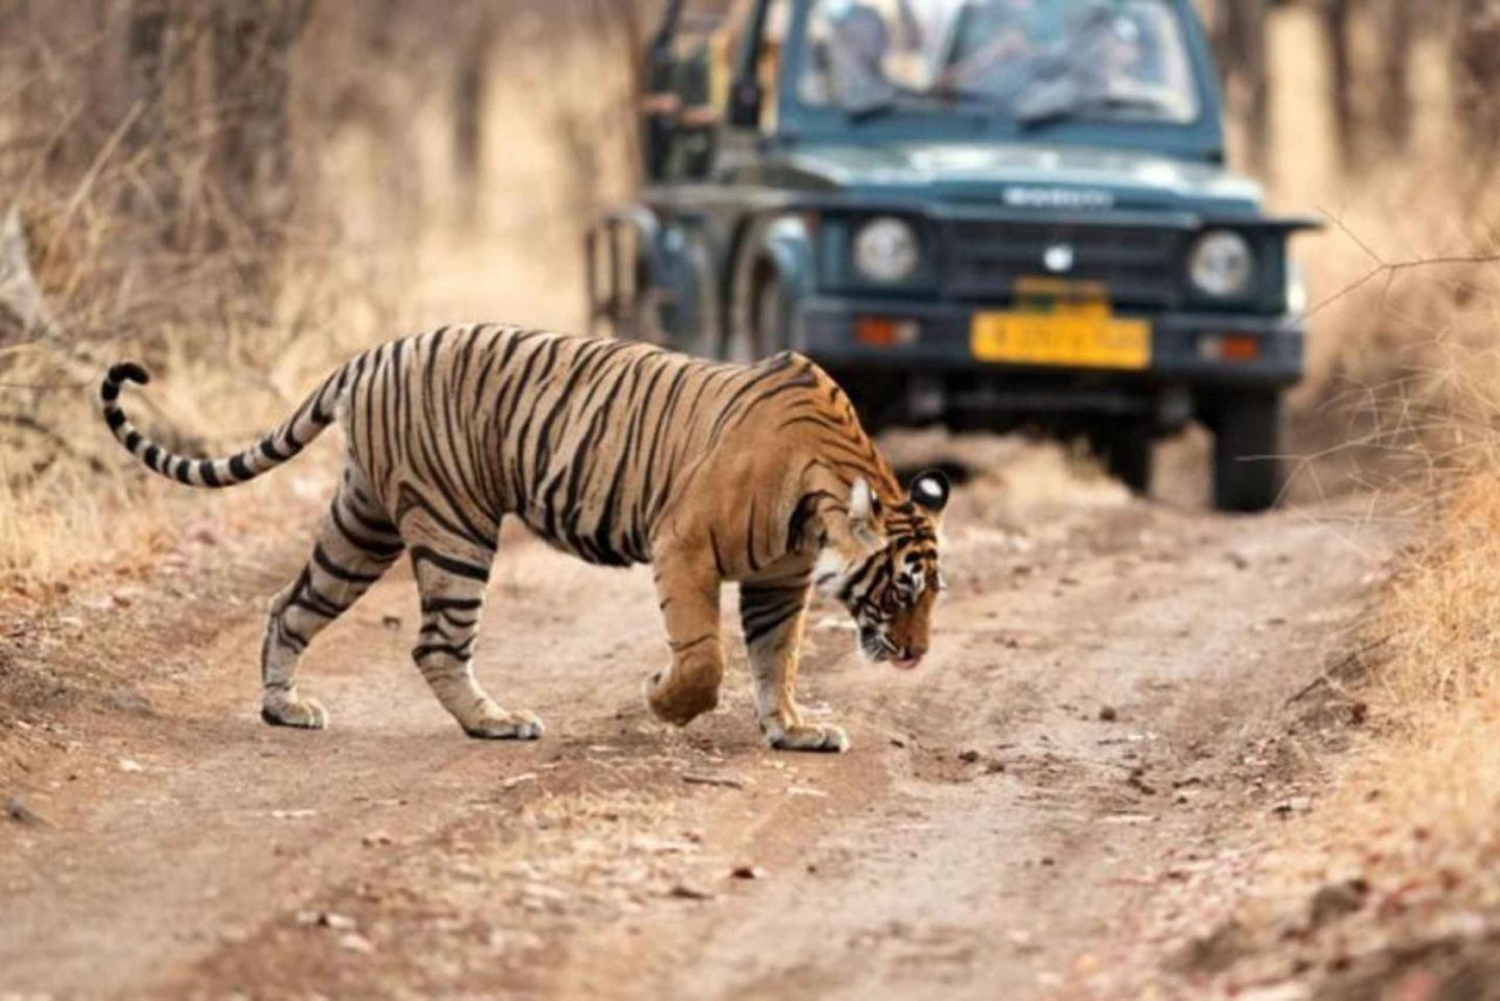 Von Jaipur aus: Private Ranthambore Tagestour mit Tigersafari